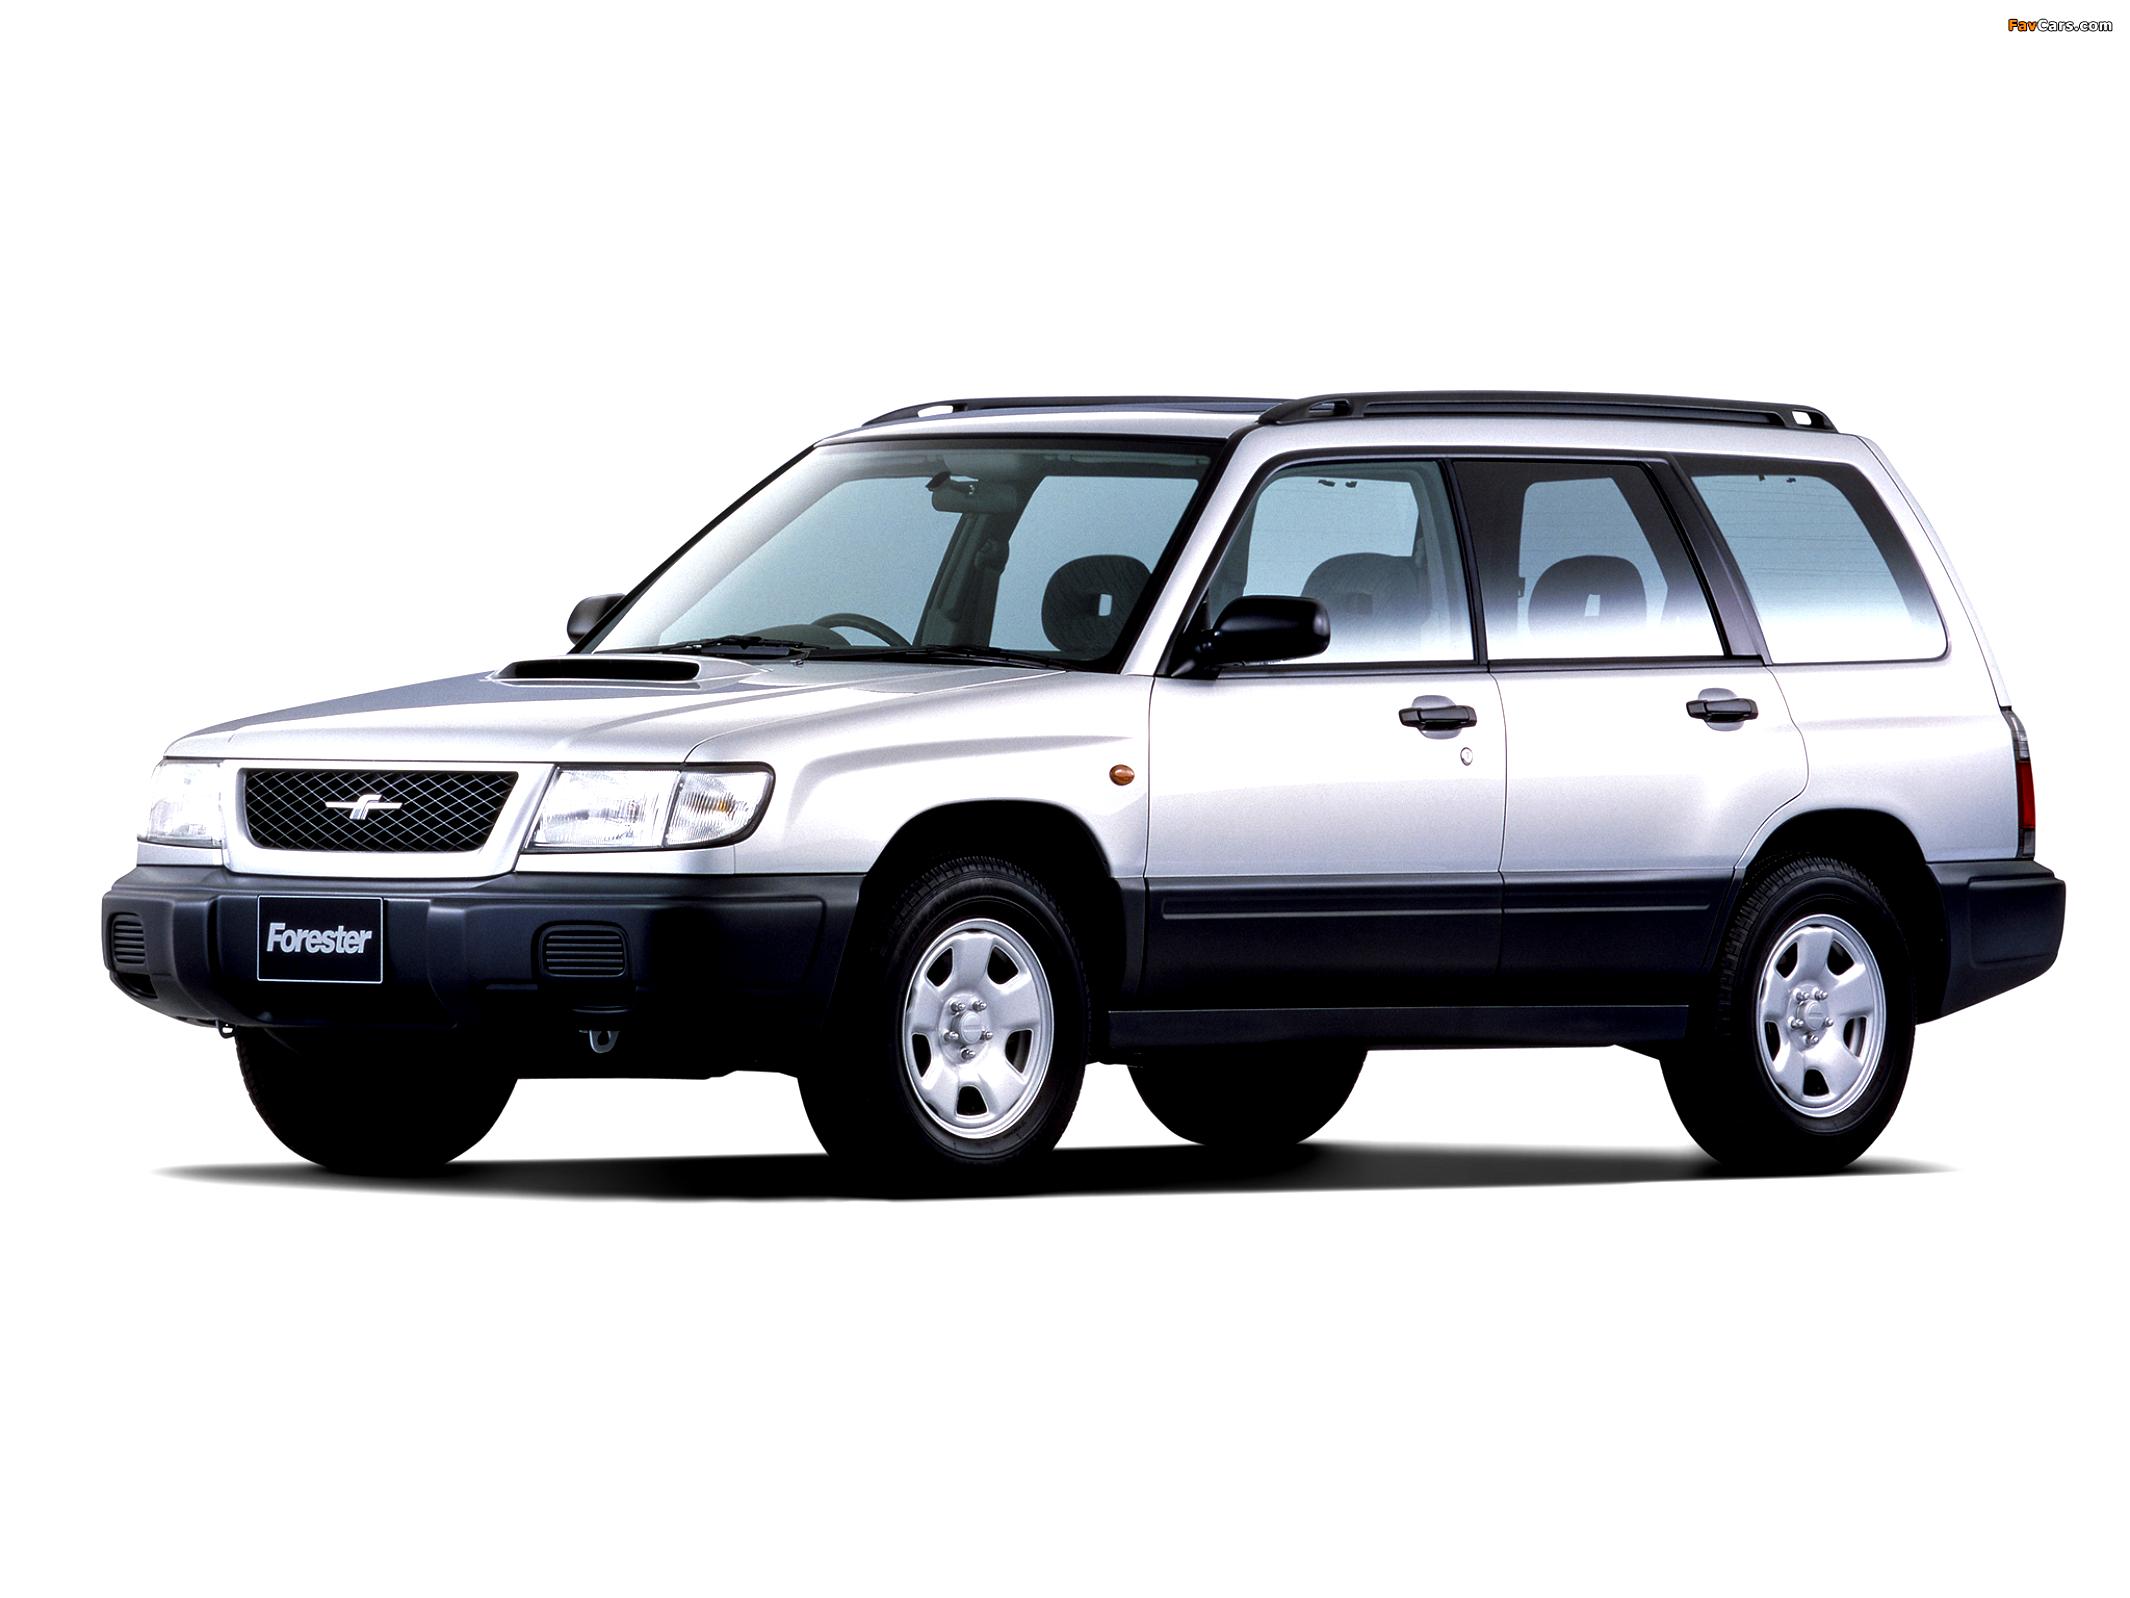 Subaru Forester 1997 on